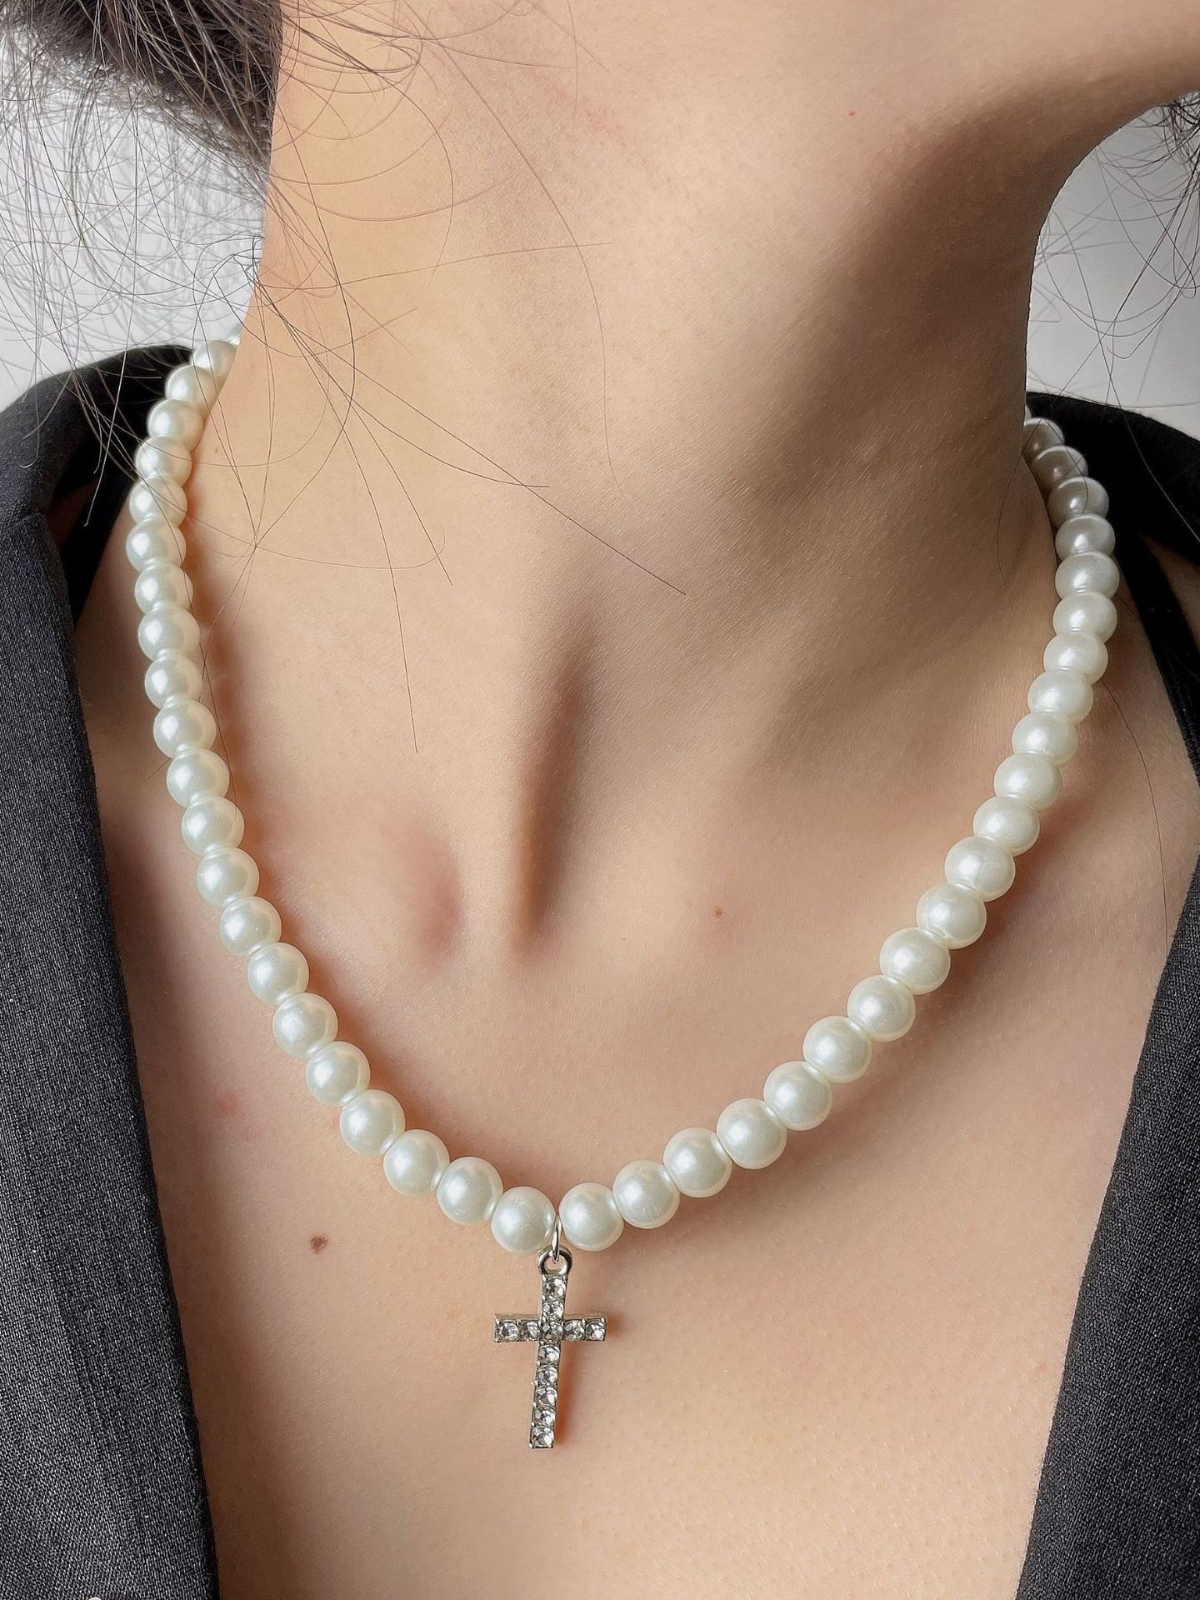 Girls Formal Accessories | Diamond Cross Pendant Pearl Necklace